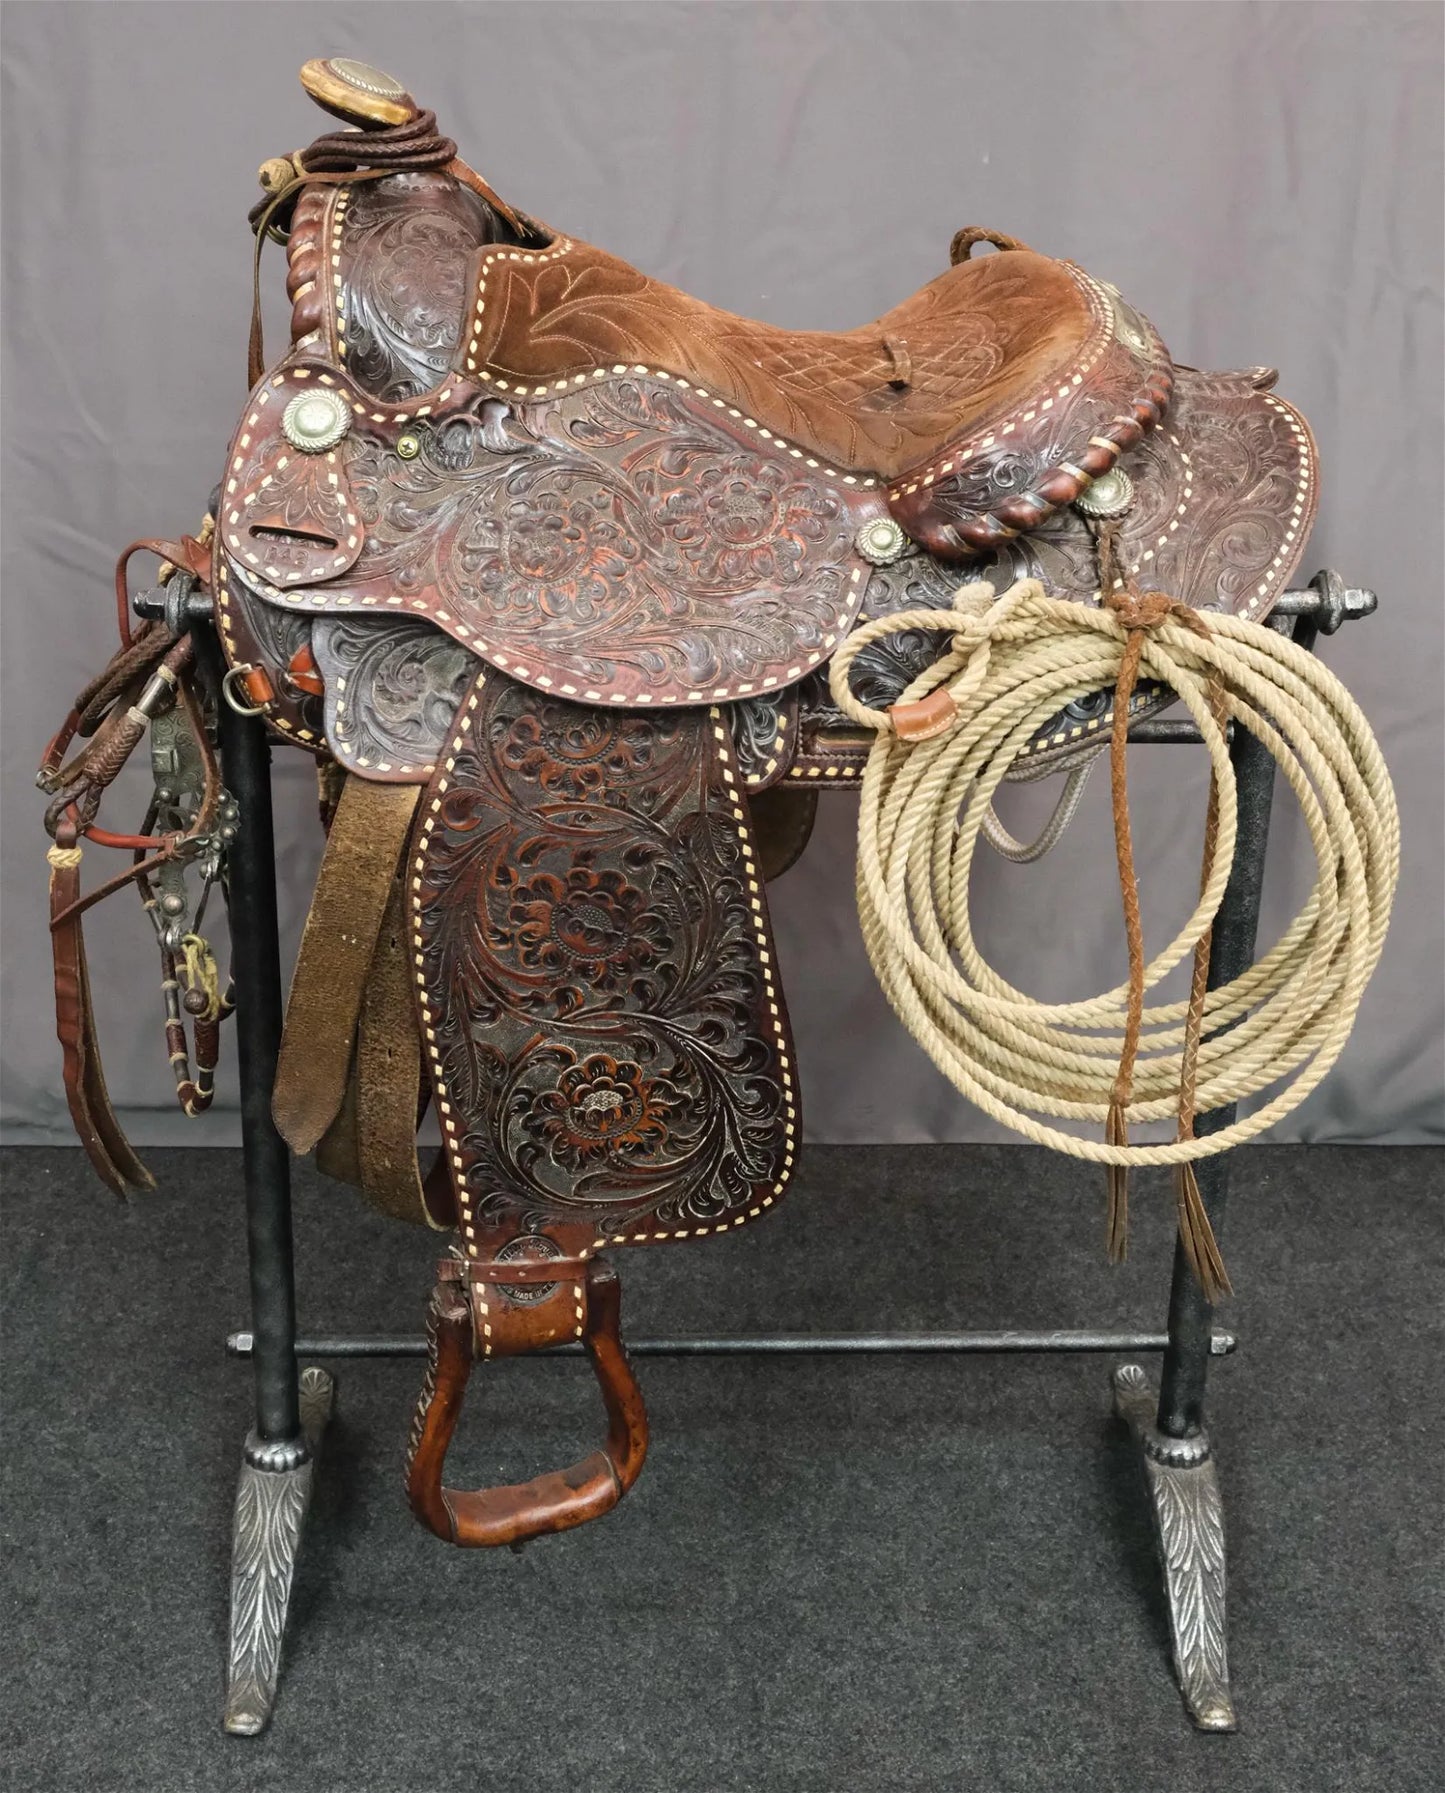 An Original Billy Royal Arabian Saddle on Stand